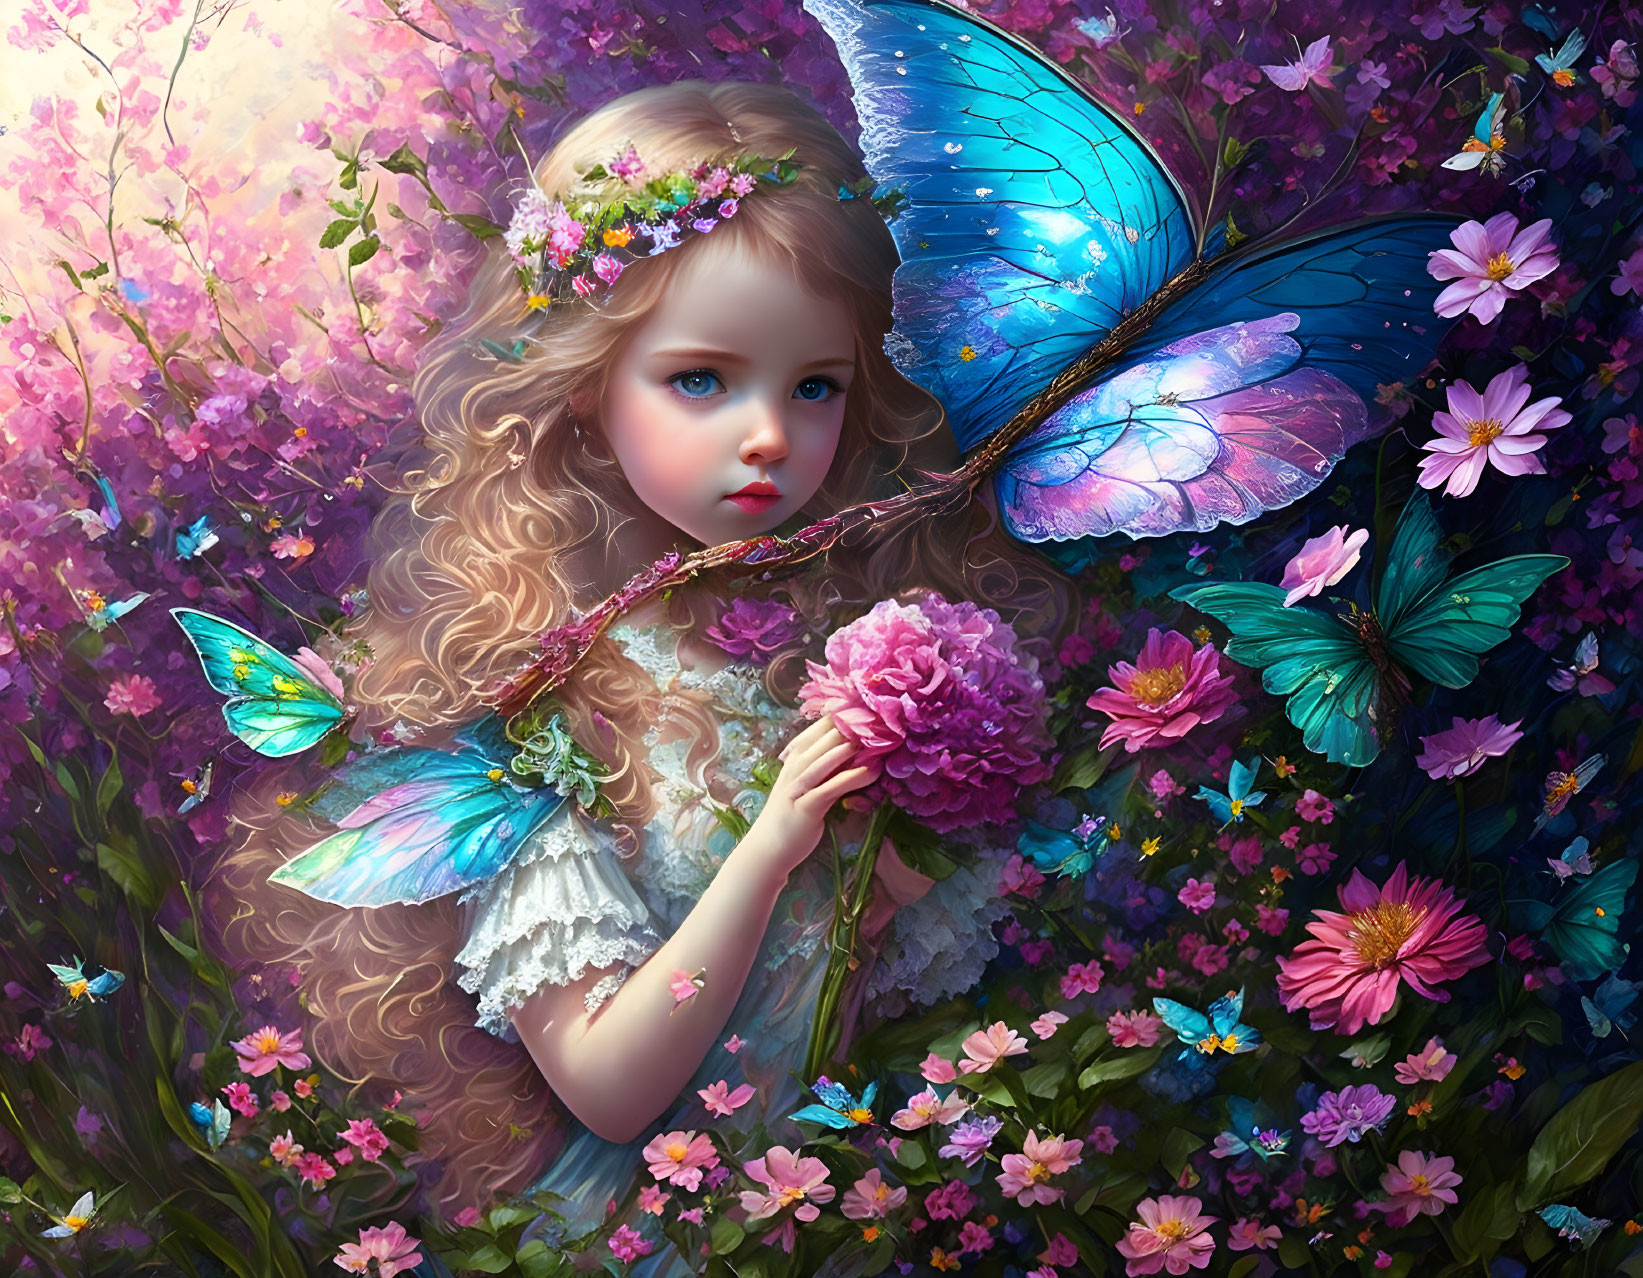 Flowers & Fairies